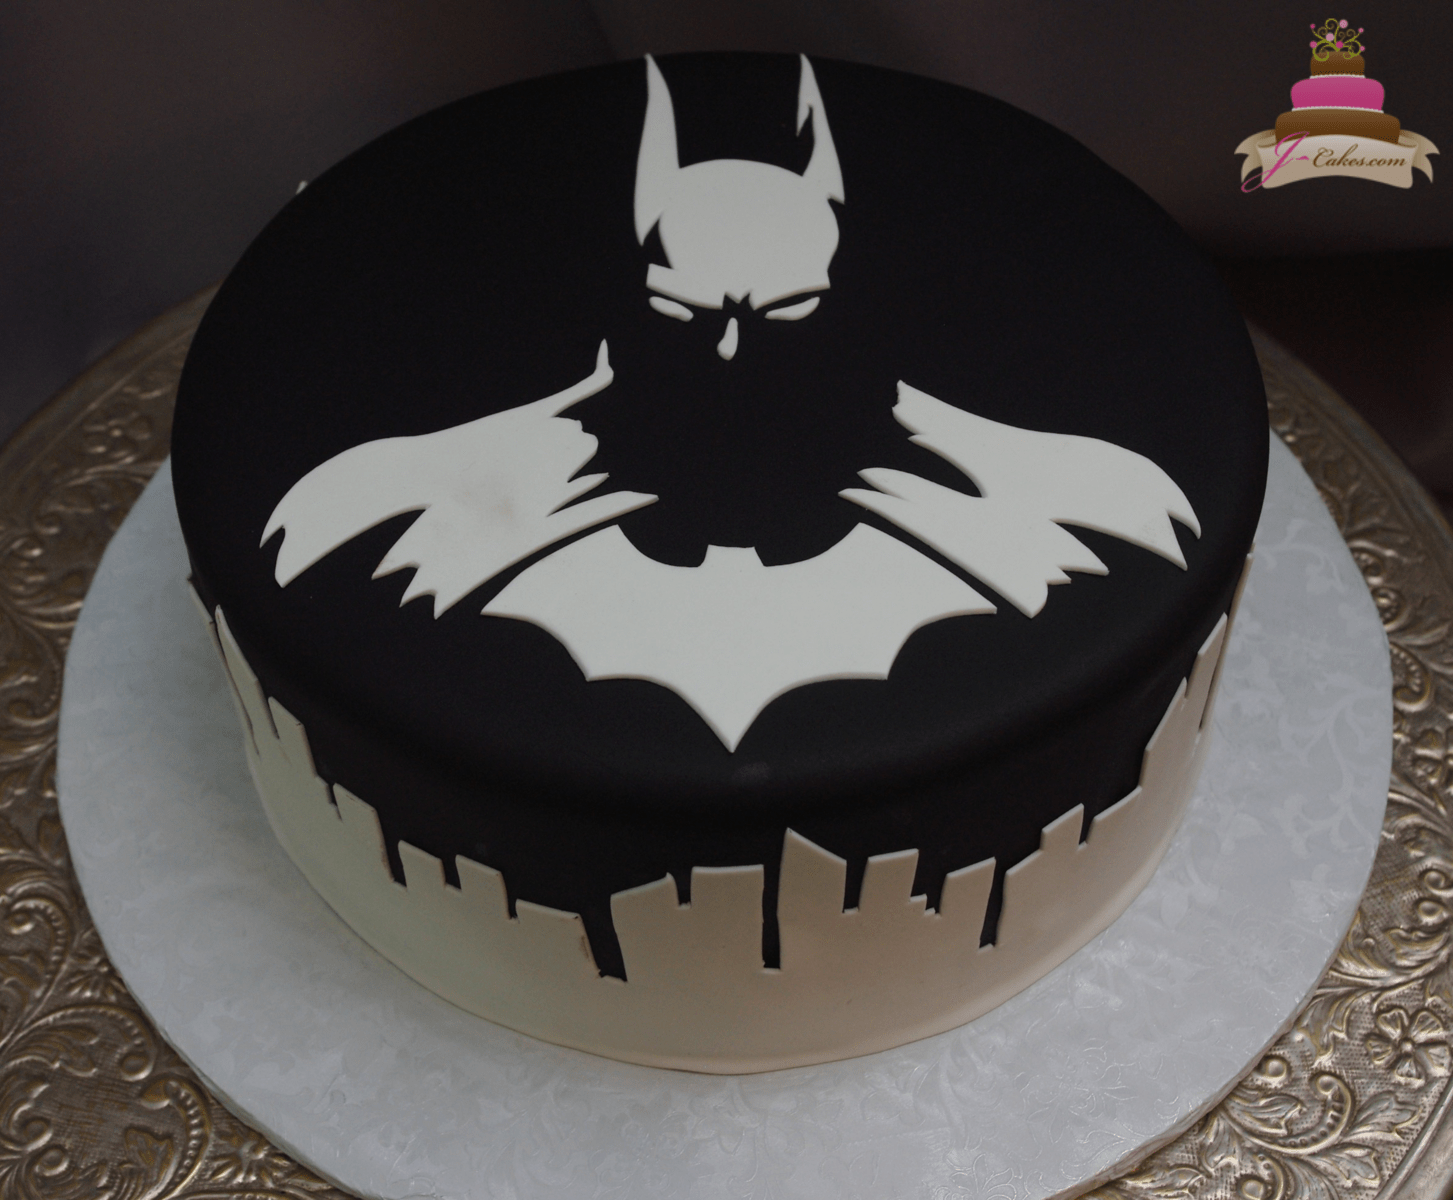 (553) Black and White Batman Cake